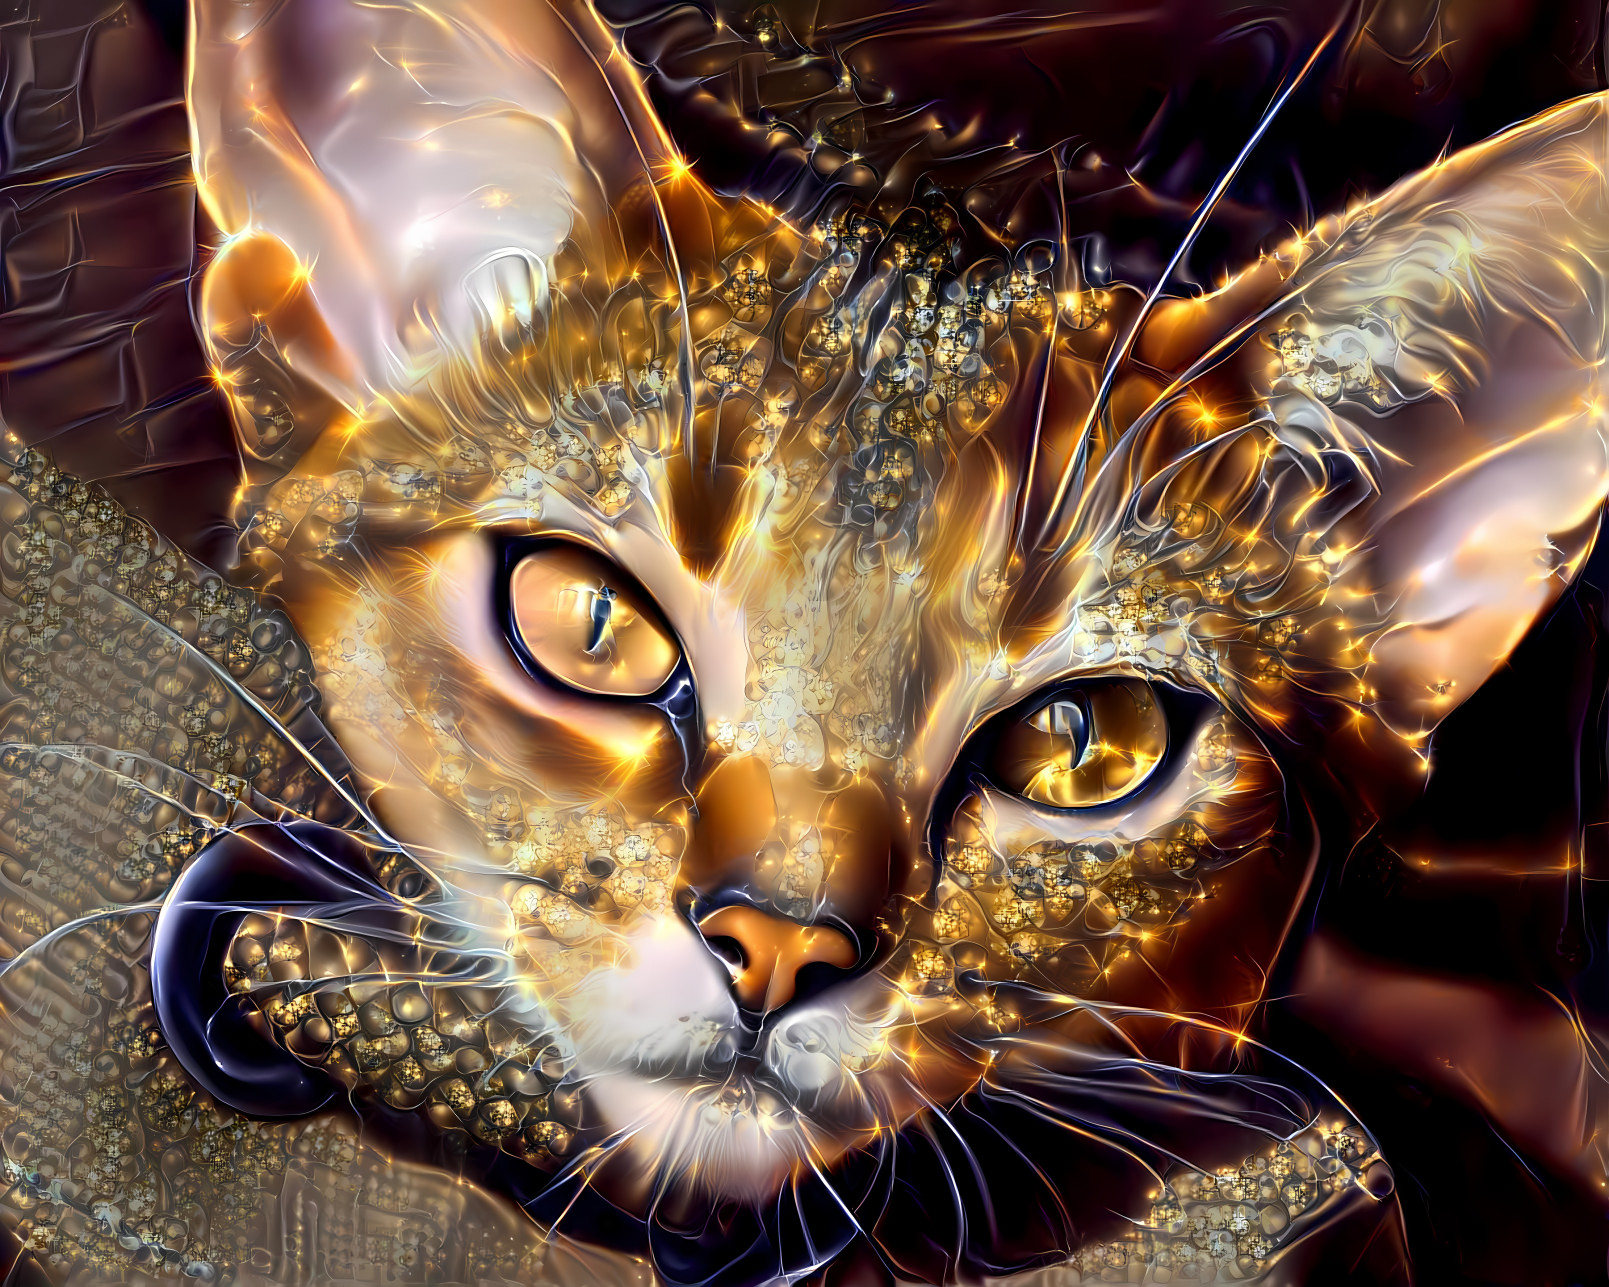 Cutest Bejeweled Cat in a Pack [FHD]